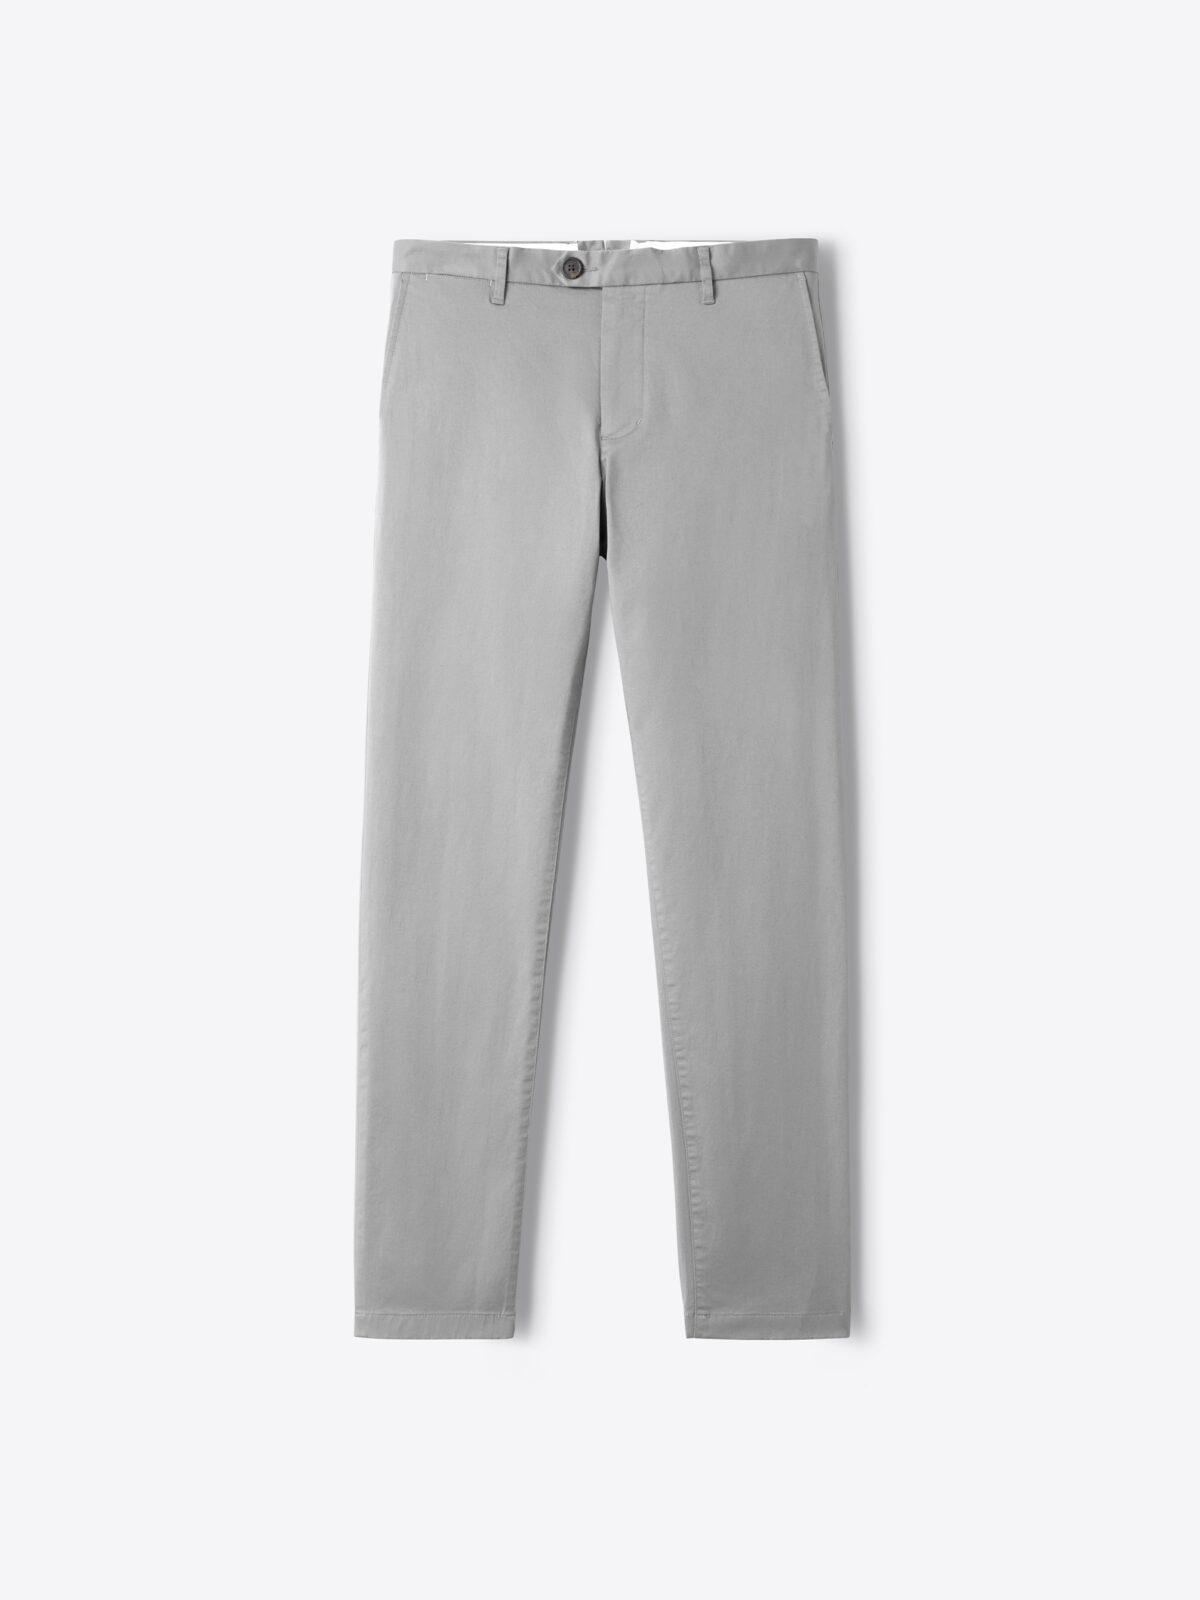 Di Sondrio Grey Stretch Cotton Chino - Custom Fit Pants